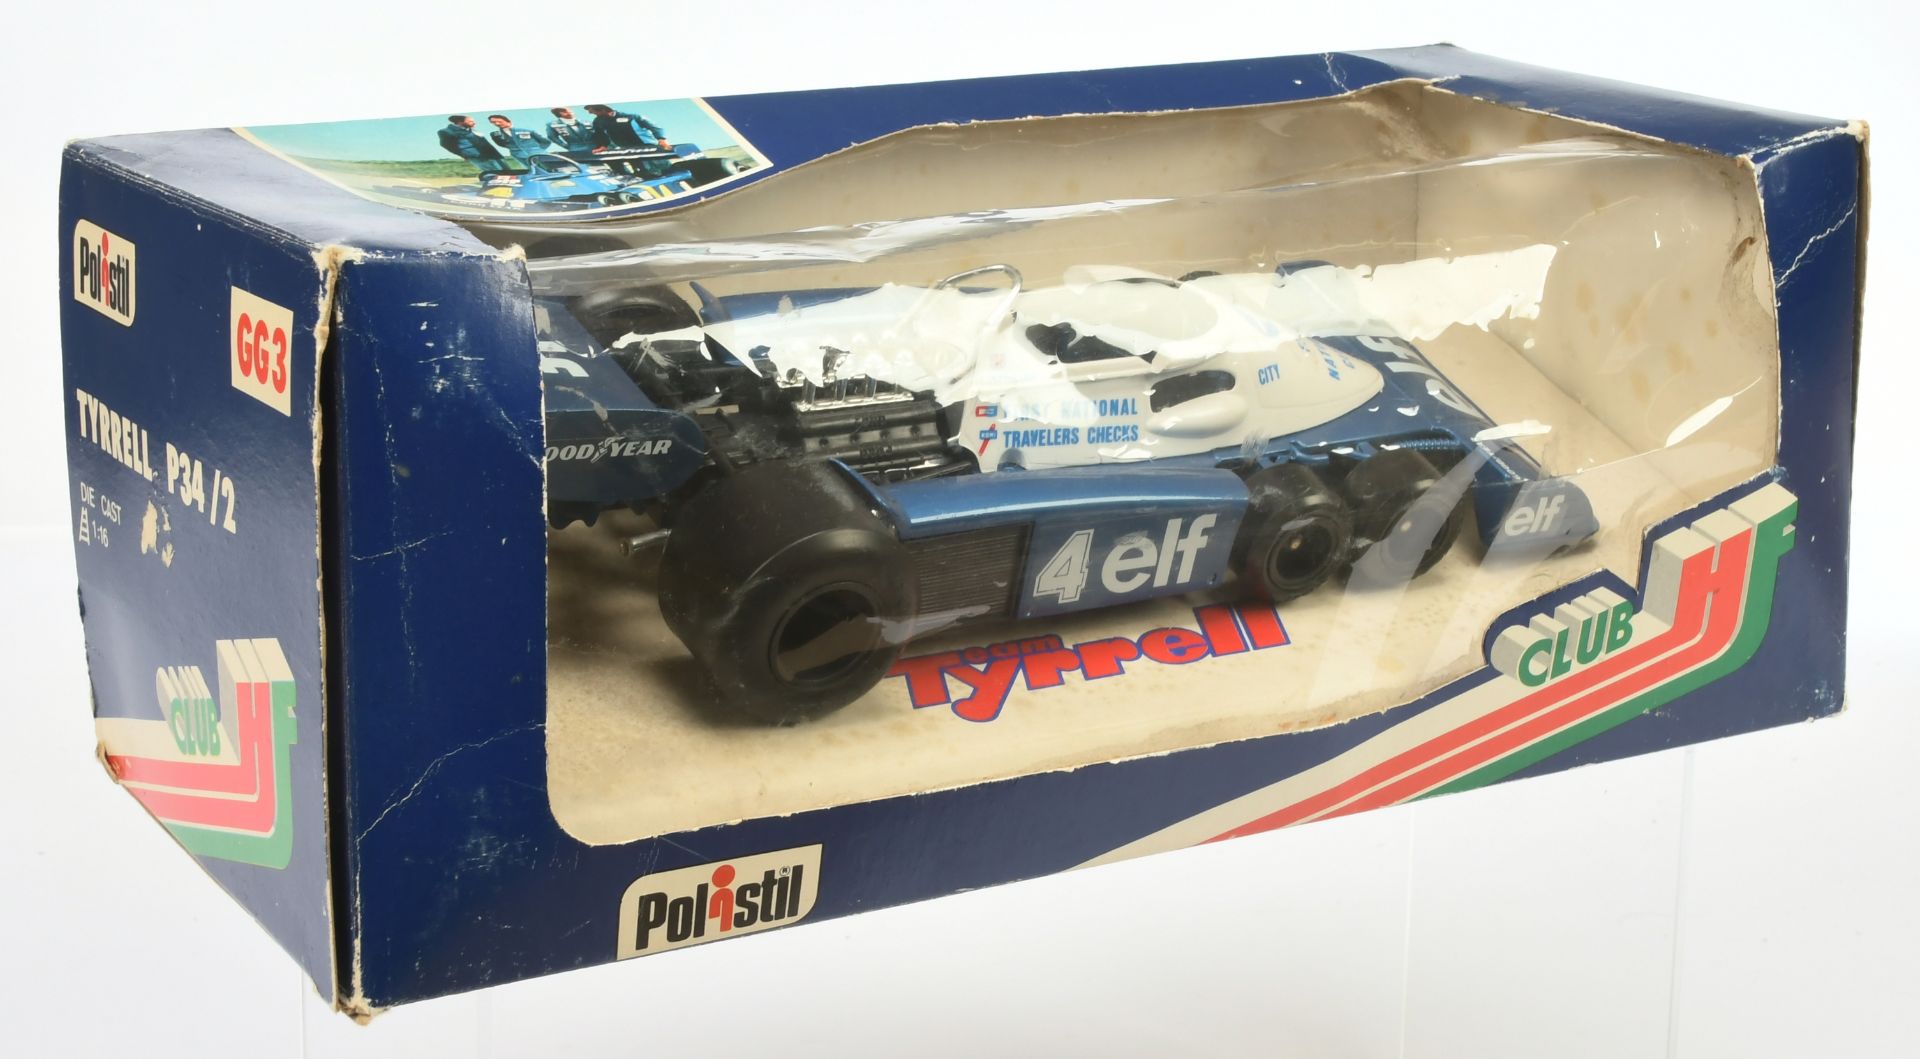 Polistil GG3 Tyrrell P34/2 diecast 1:16 scale model "elf First National City